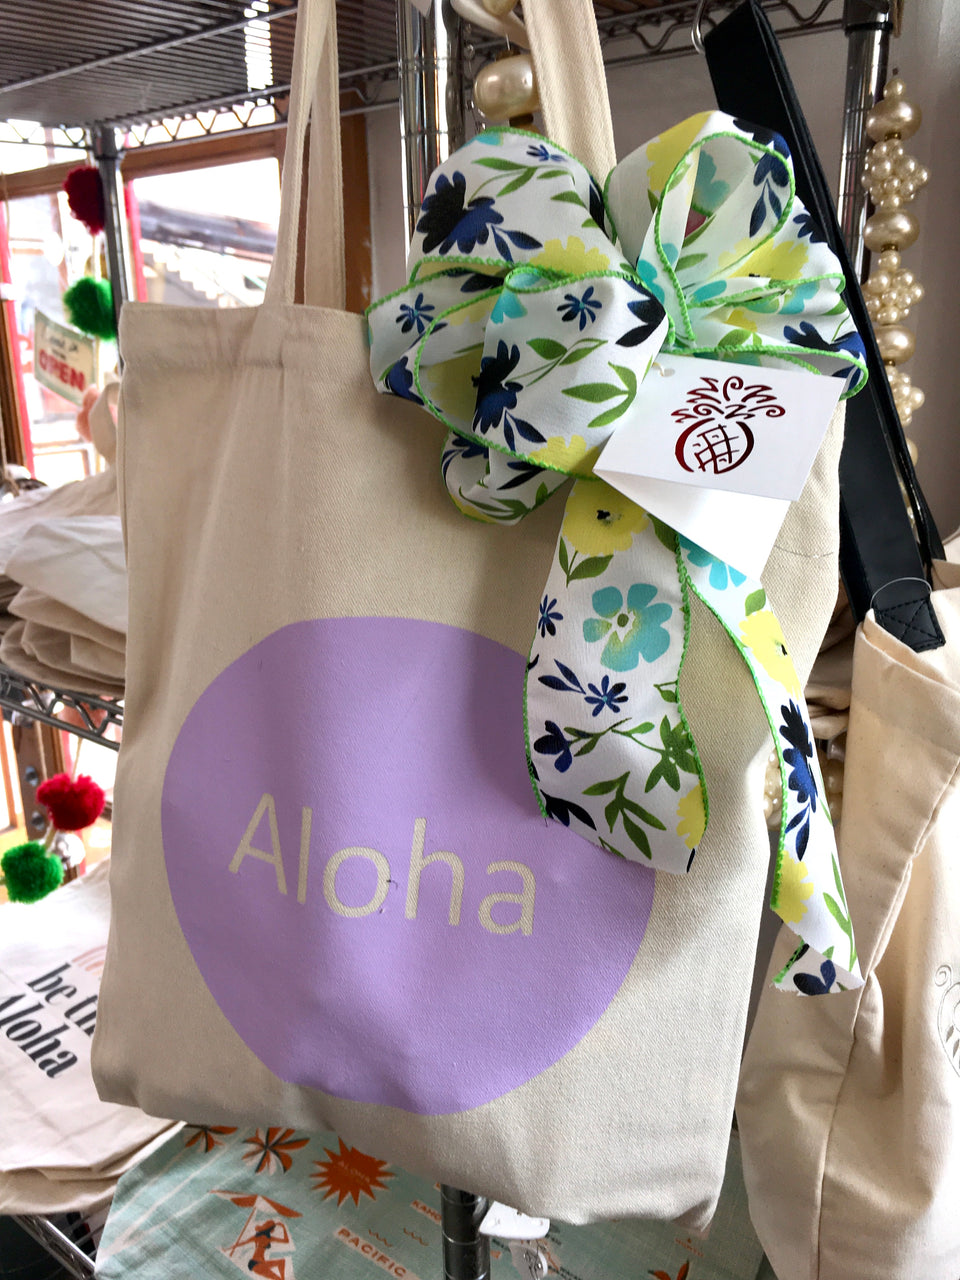 Aloha Tote - Includes free delivery on Oahu!